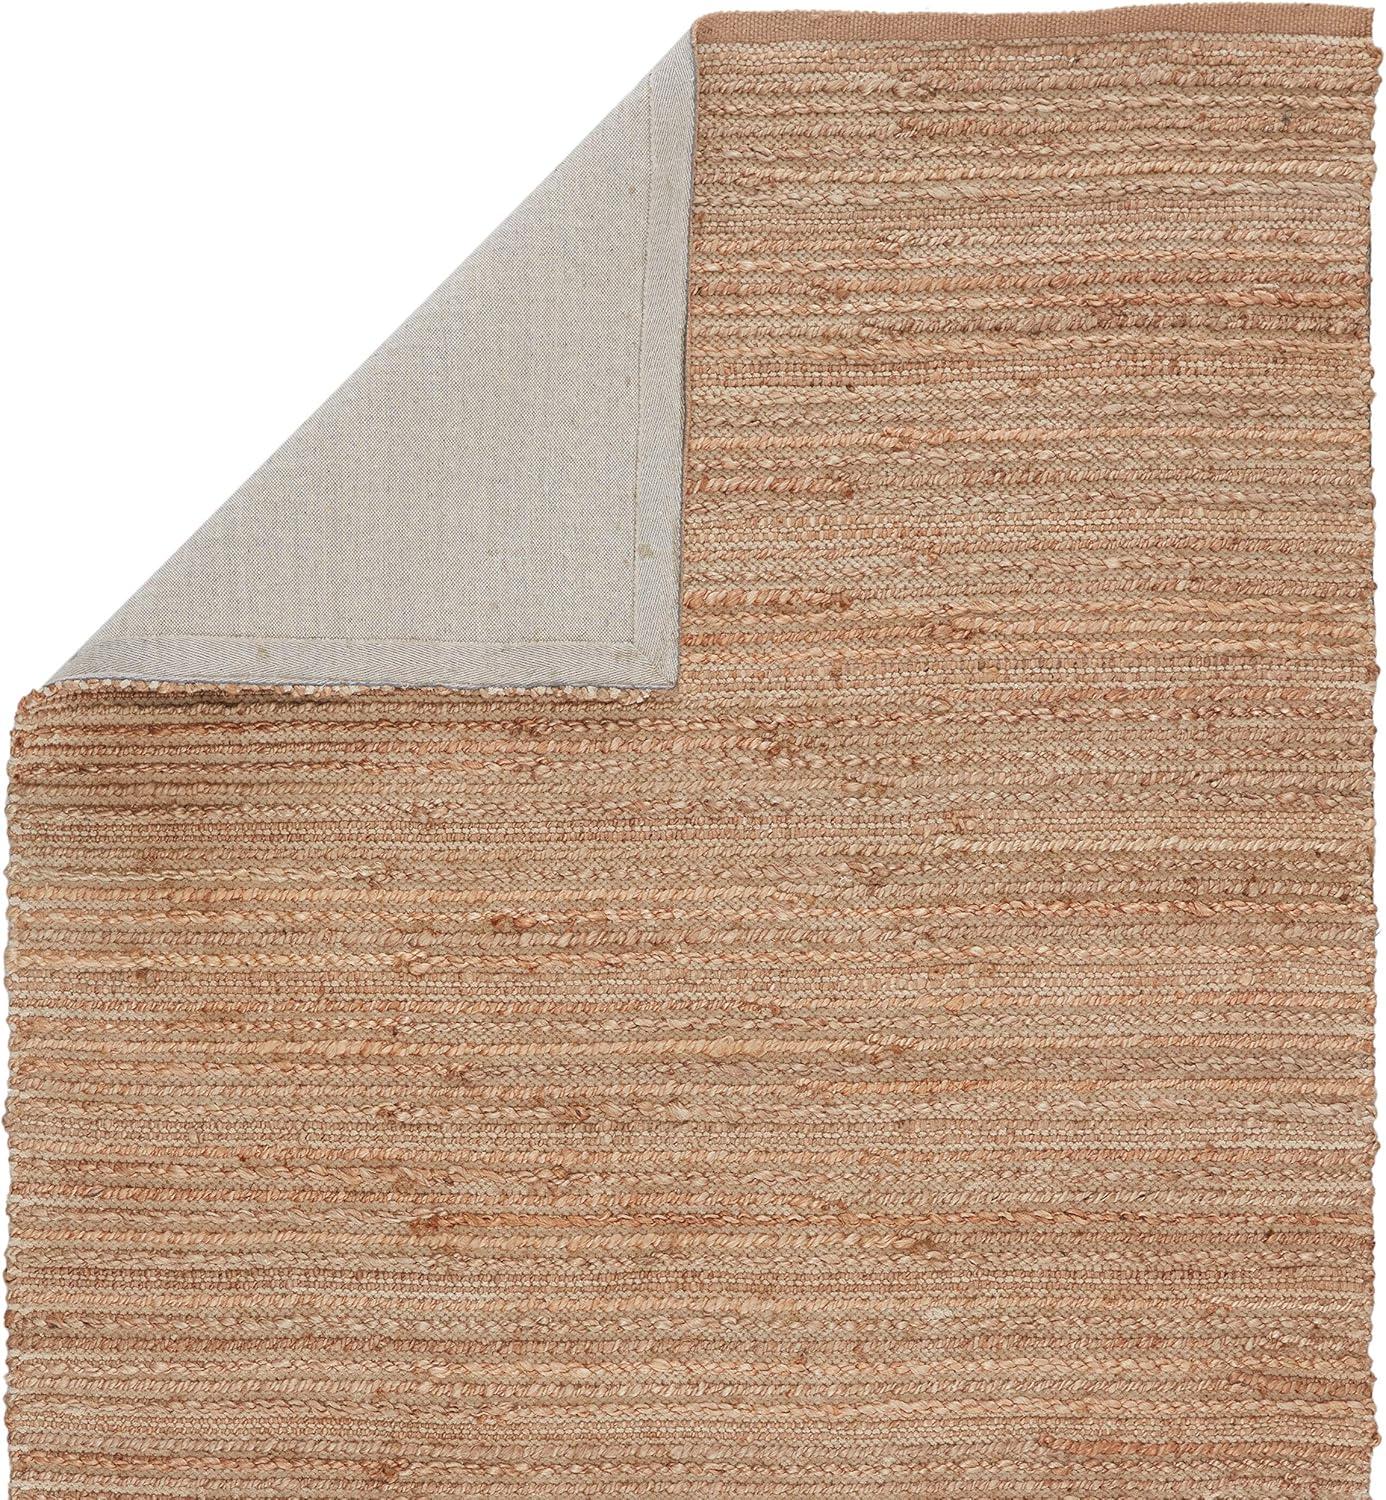 Reversible Tan & Ivory Flat Woven Jute-Cotton Rug 5'x8'